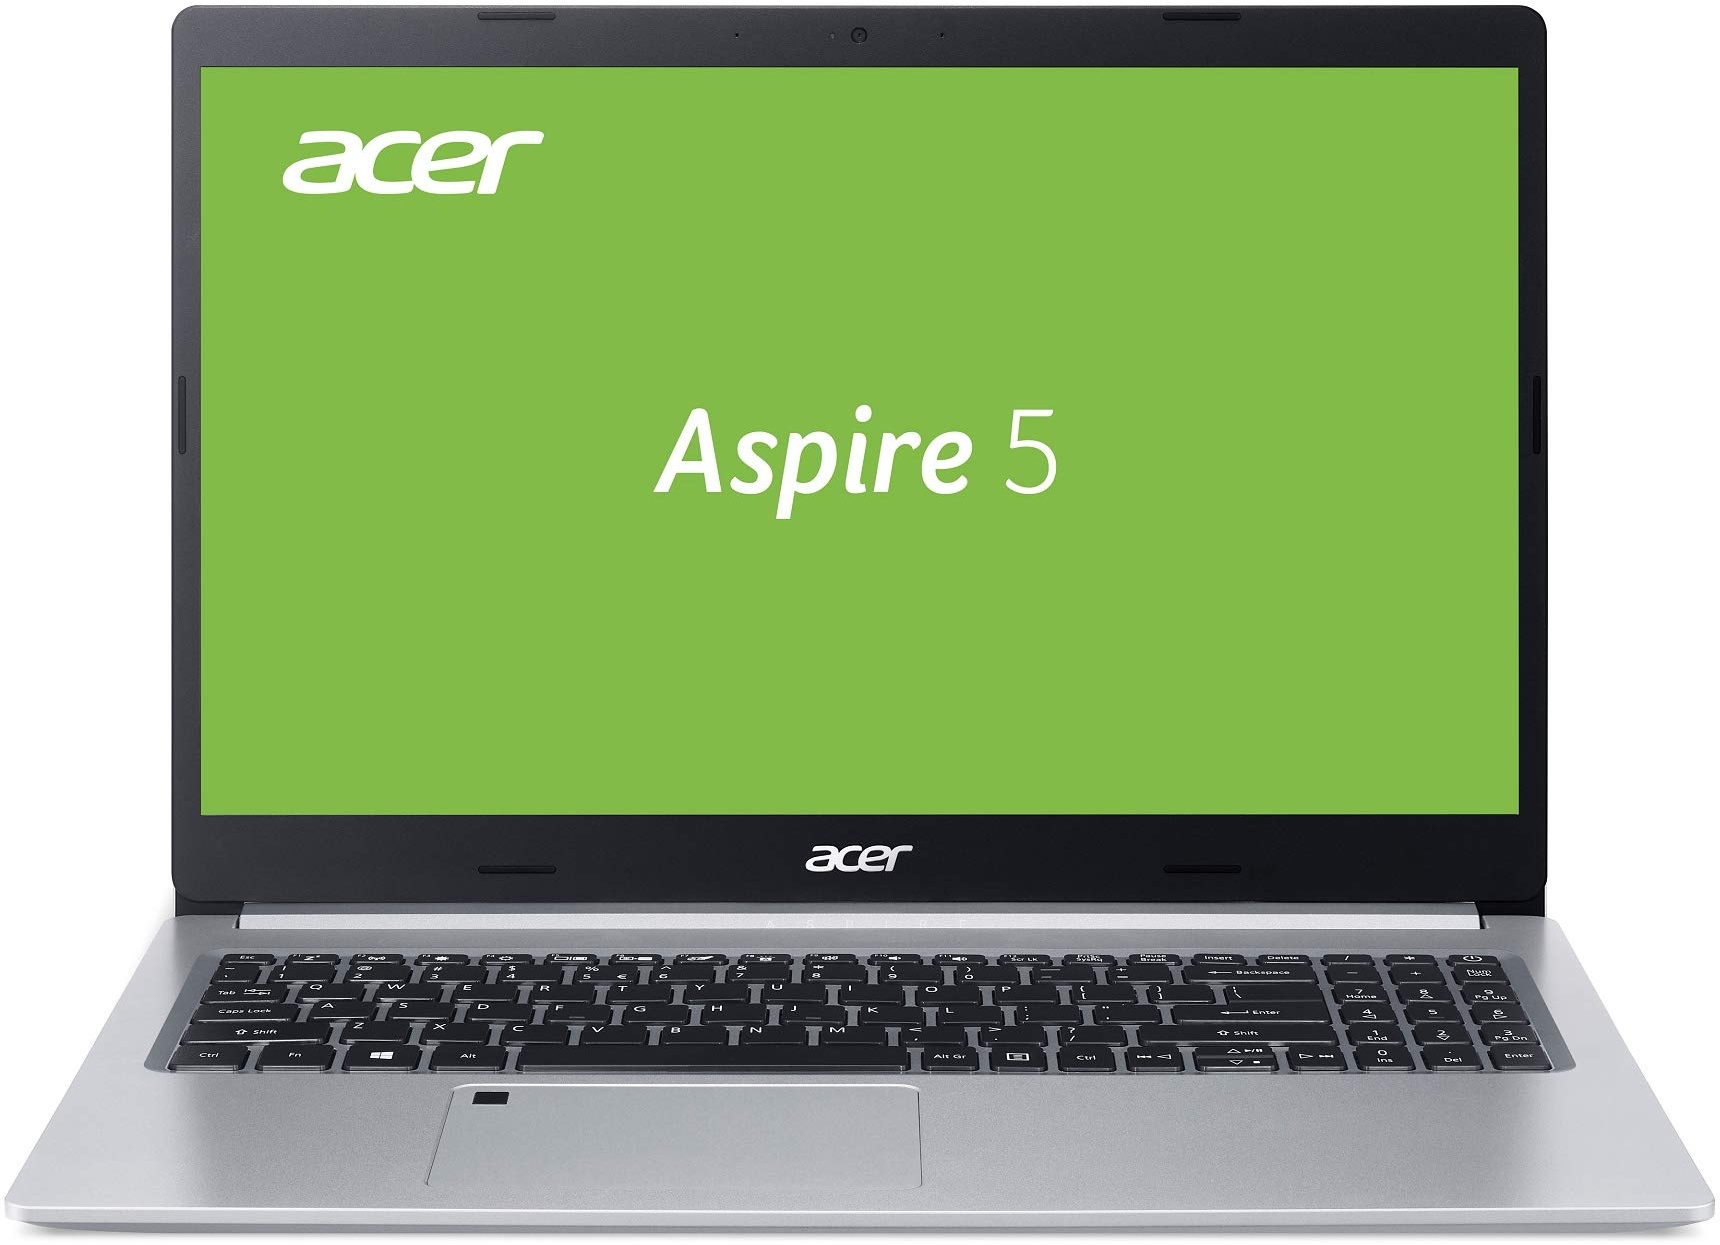 Acer Aspire 5 (A515-55-51NJ) 39,62 cm (15,6 Zoll Full-HD IPS matt) Multimedia Laptop (Intel Core i5-1035G1, 8 GB RAM, 512 GB PCIe SSD, Intel UHD, Win 10 Home) silber